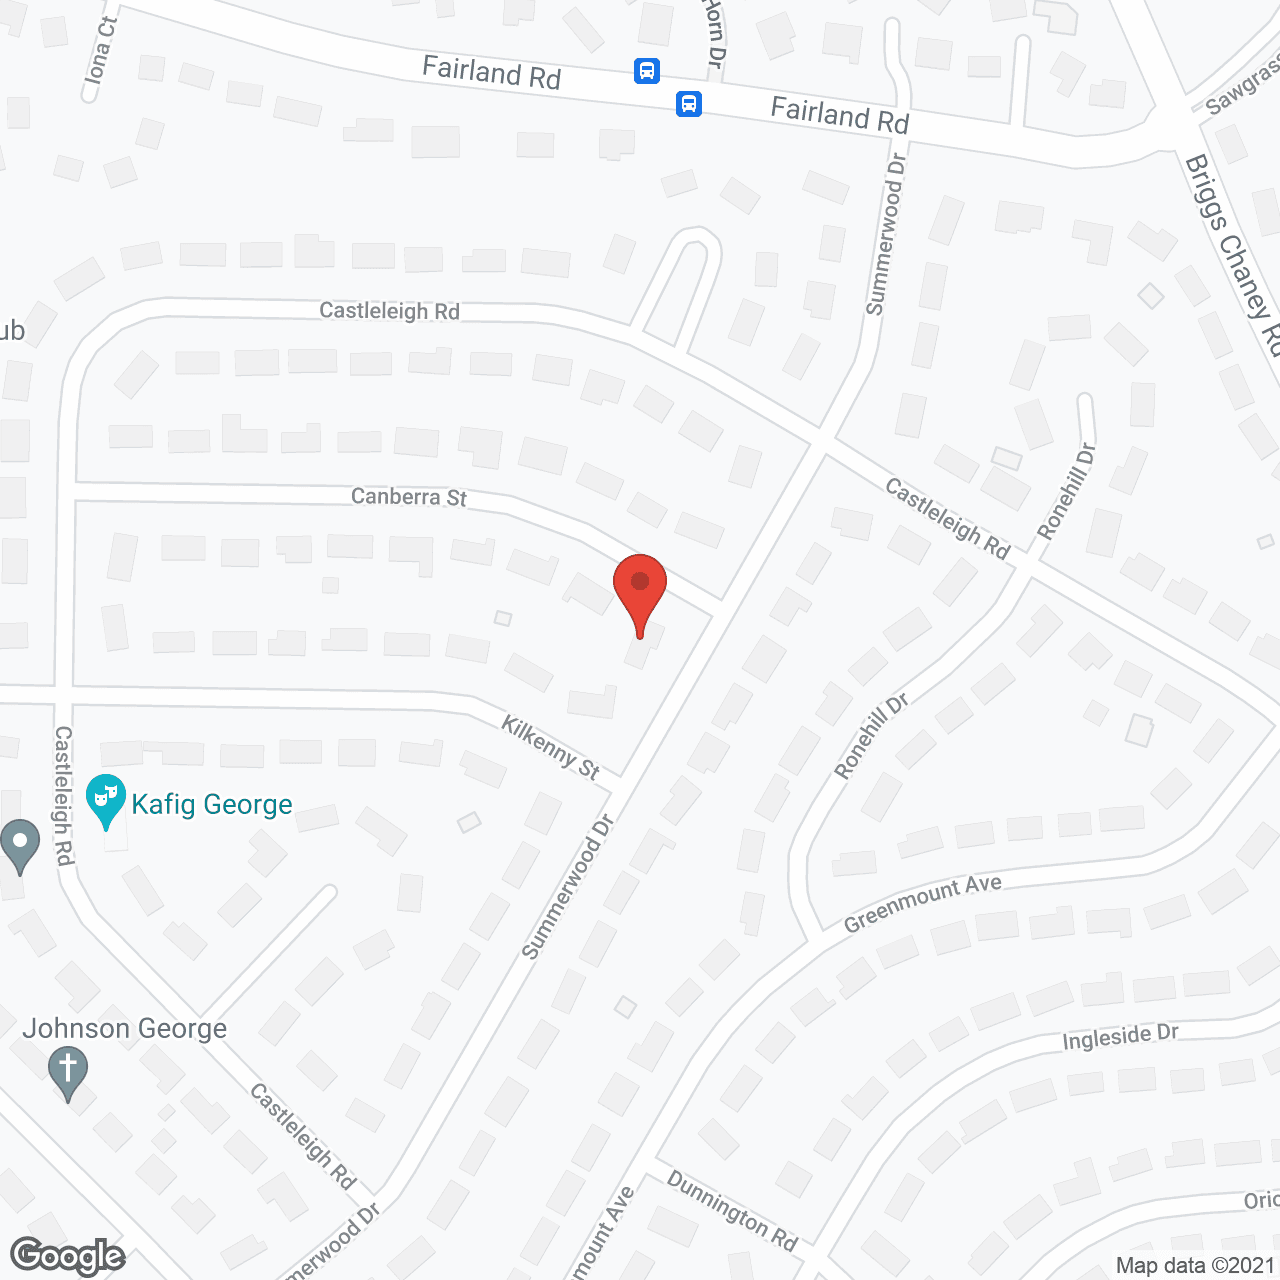 Pleasantville in google map